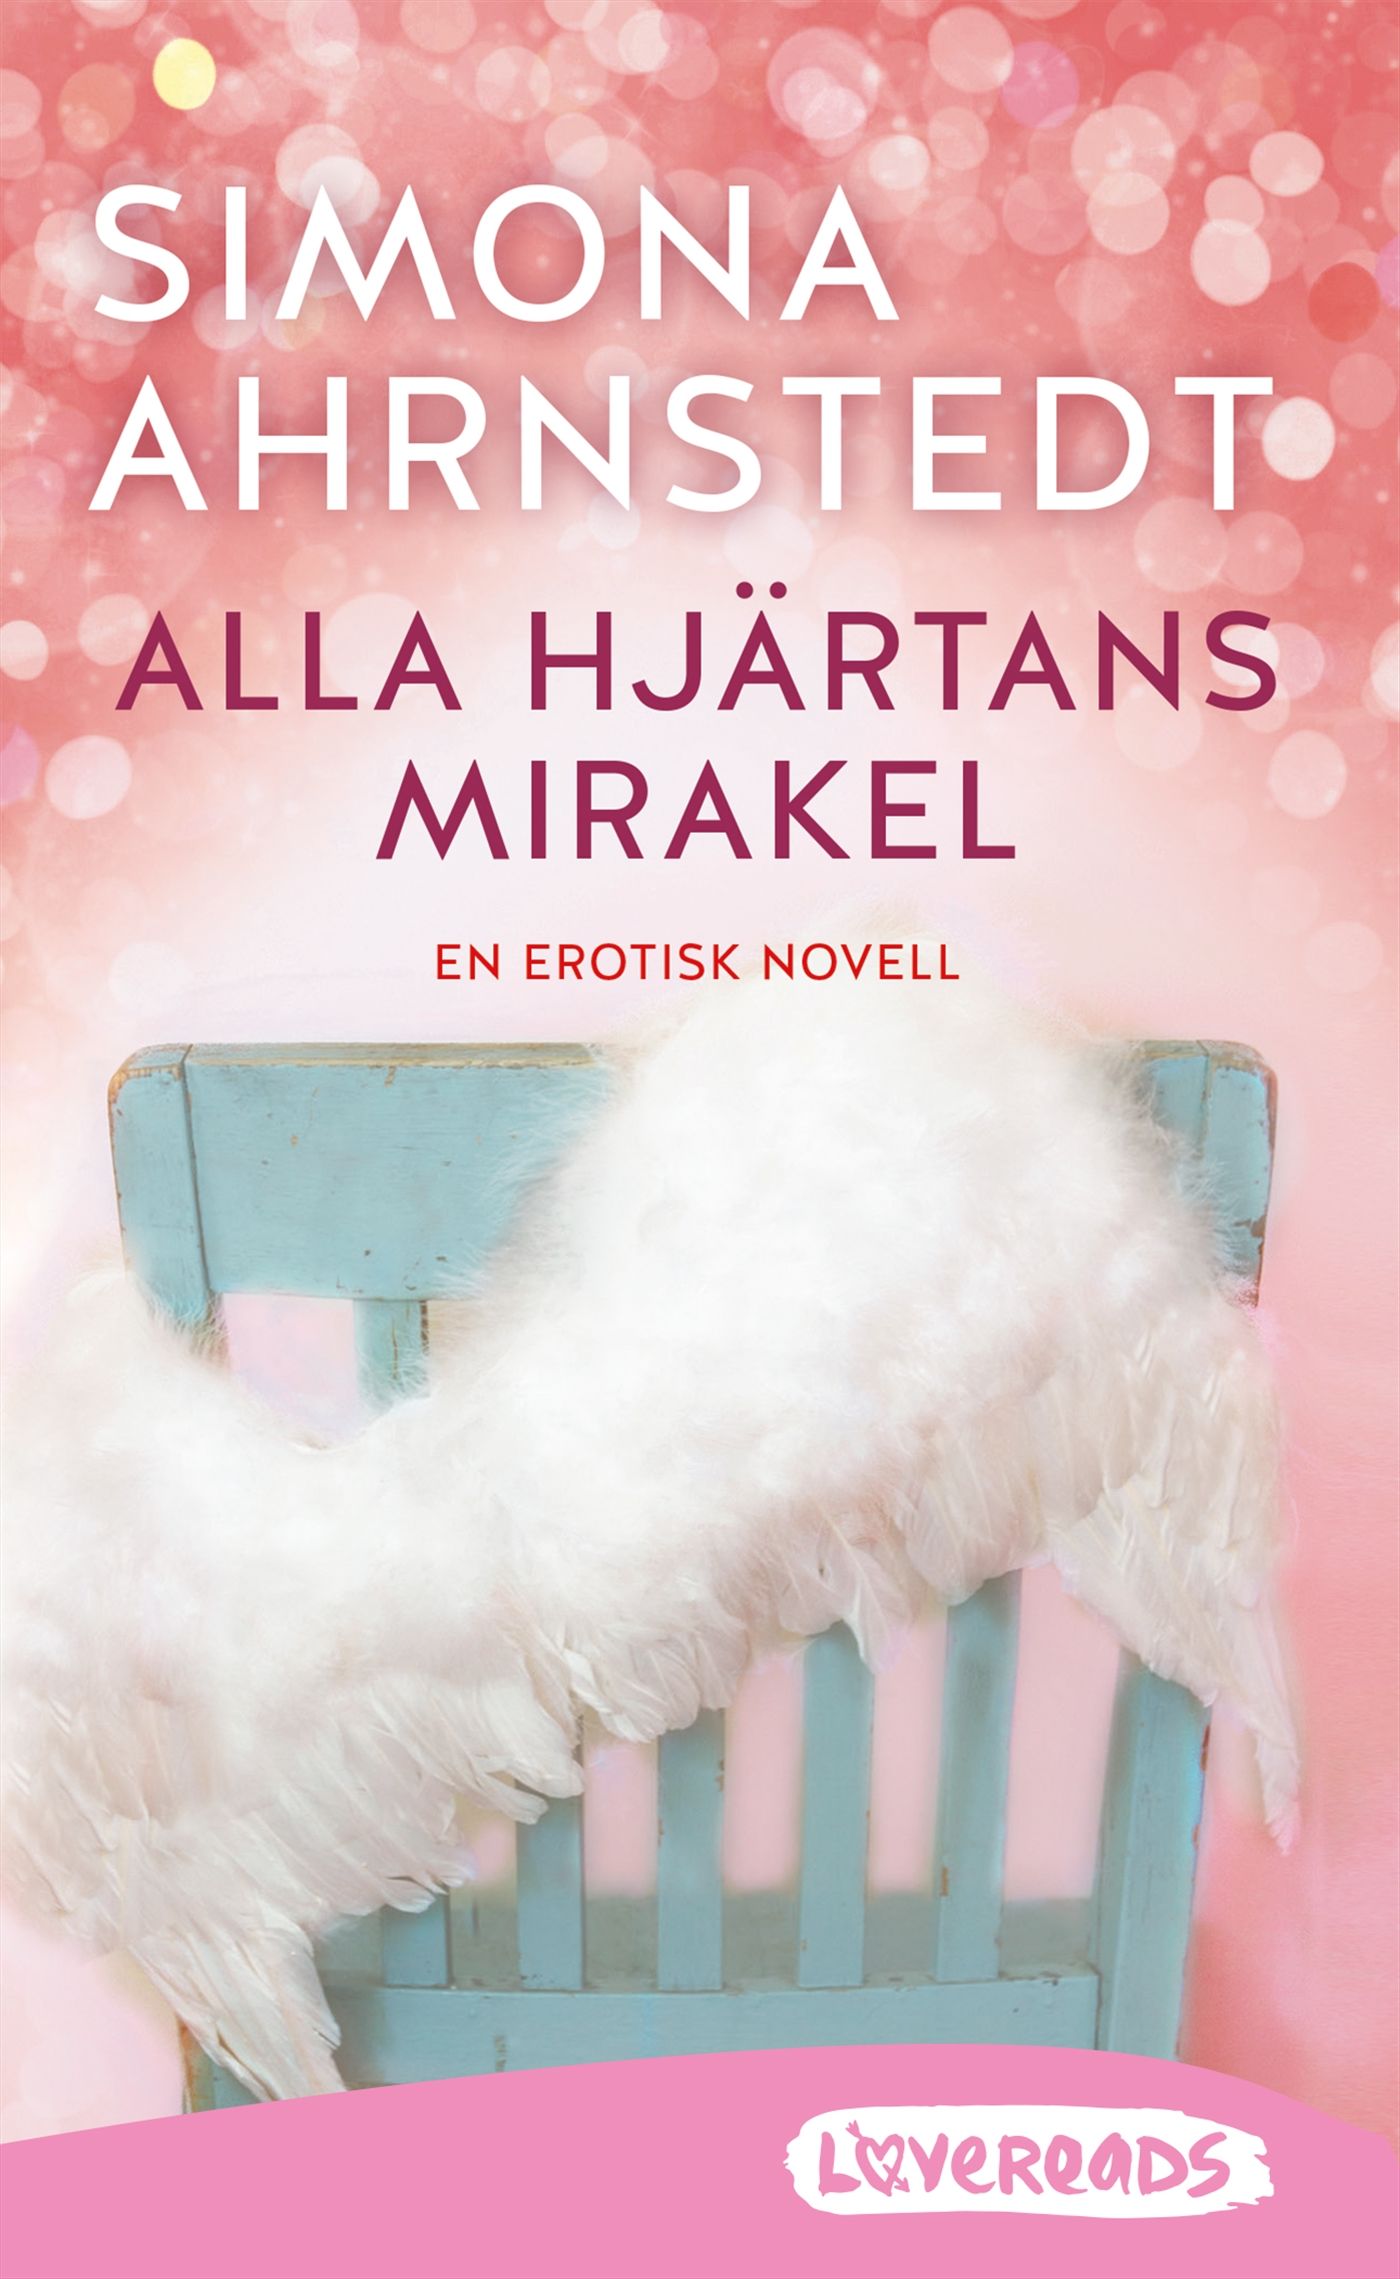 Alla hjärtans mirakel, e-bok av Simona Ahrnstedt